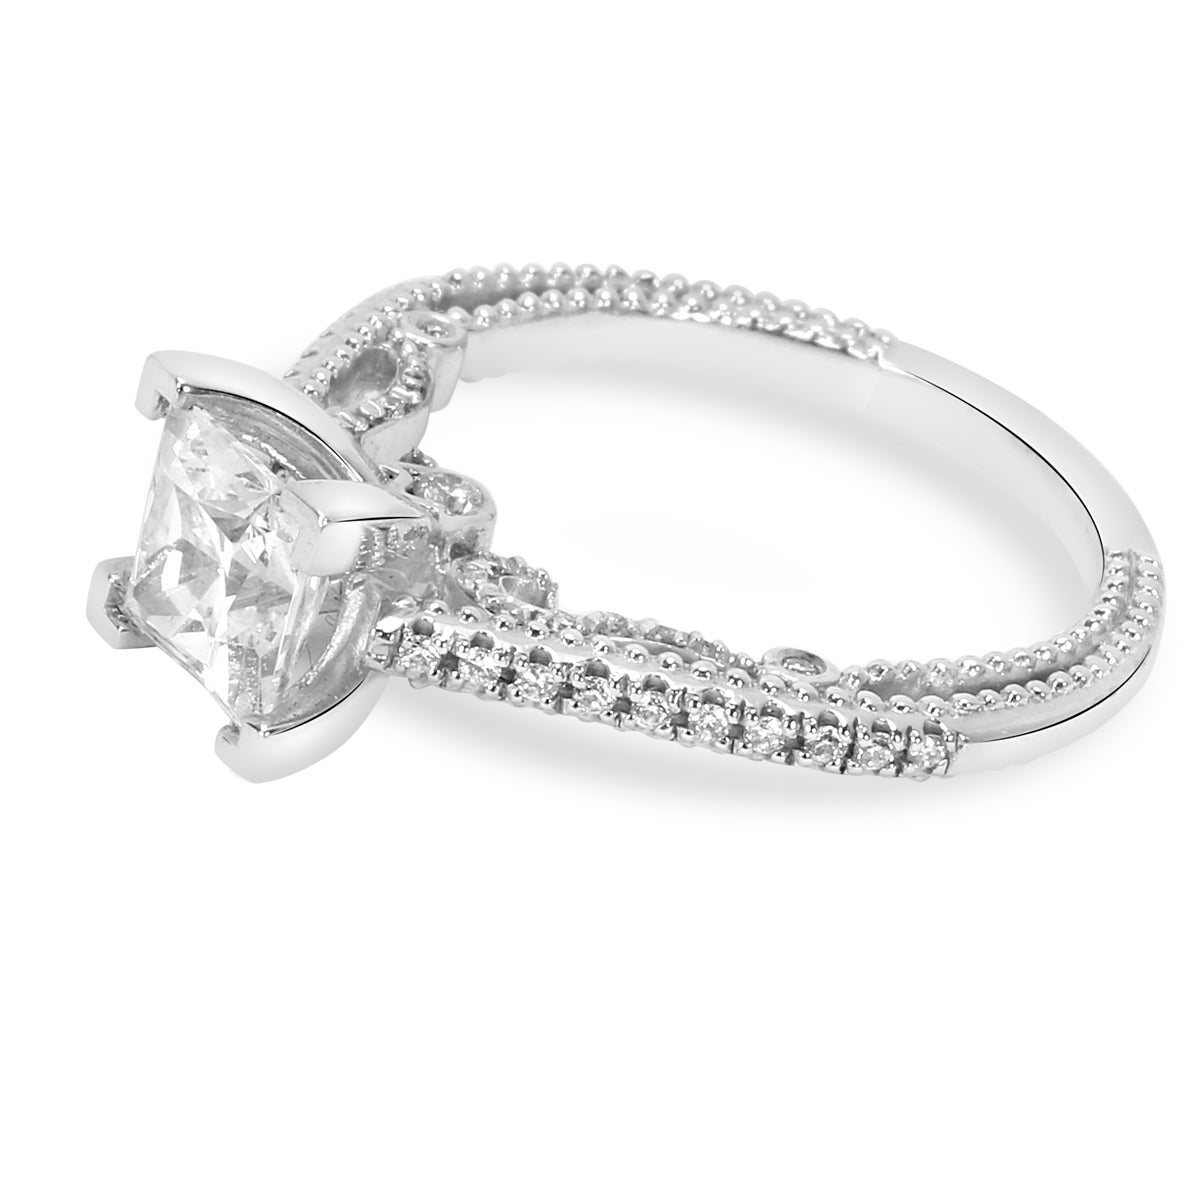 Verragio Diamond Princess Engagement Ring Setting in 18K White Gold